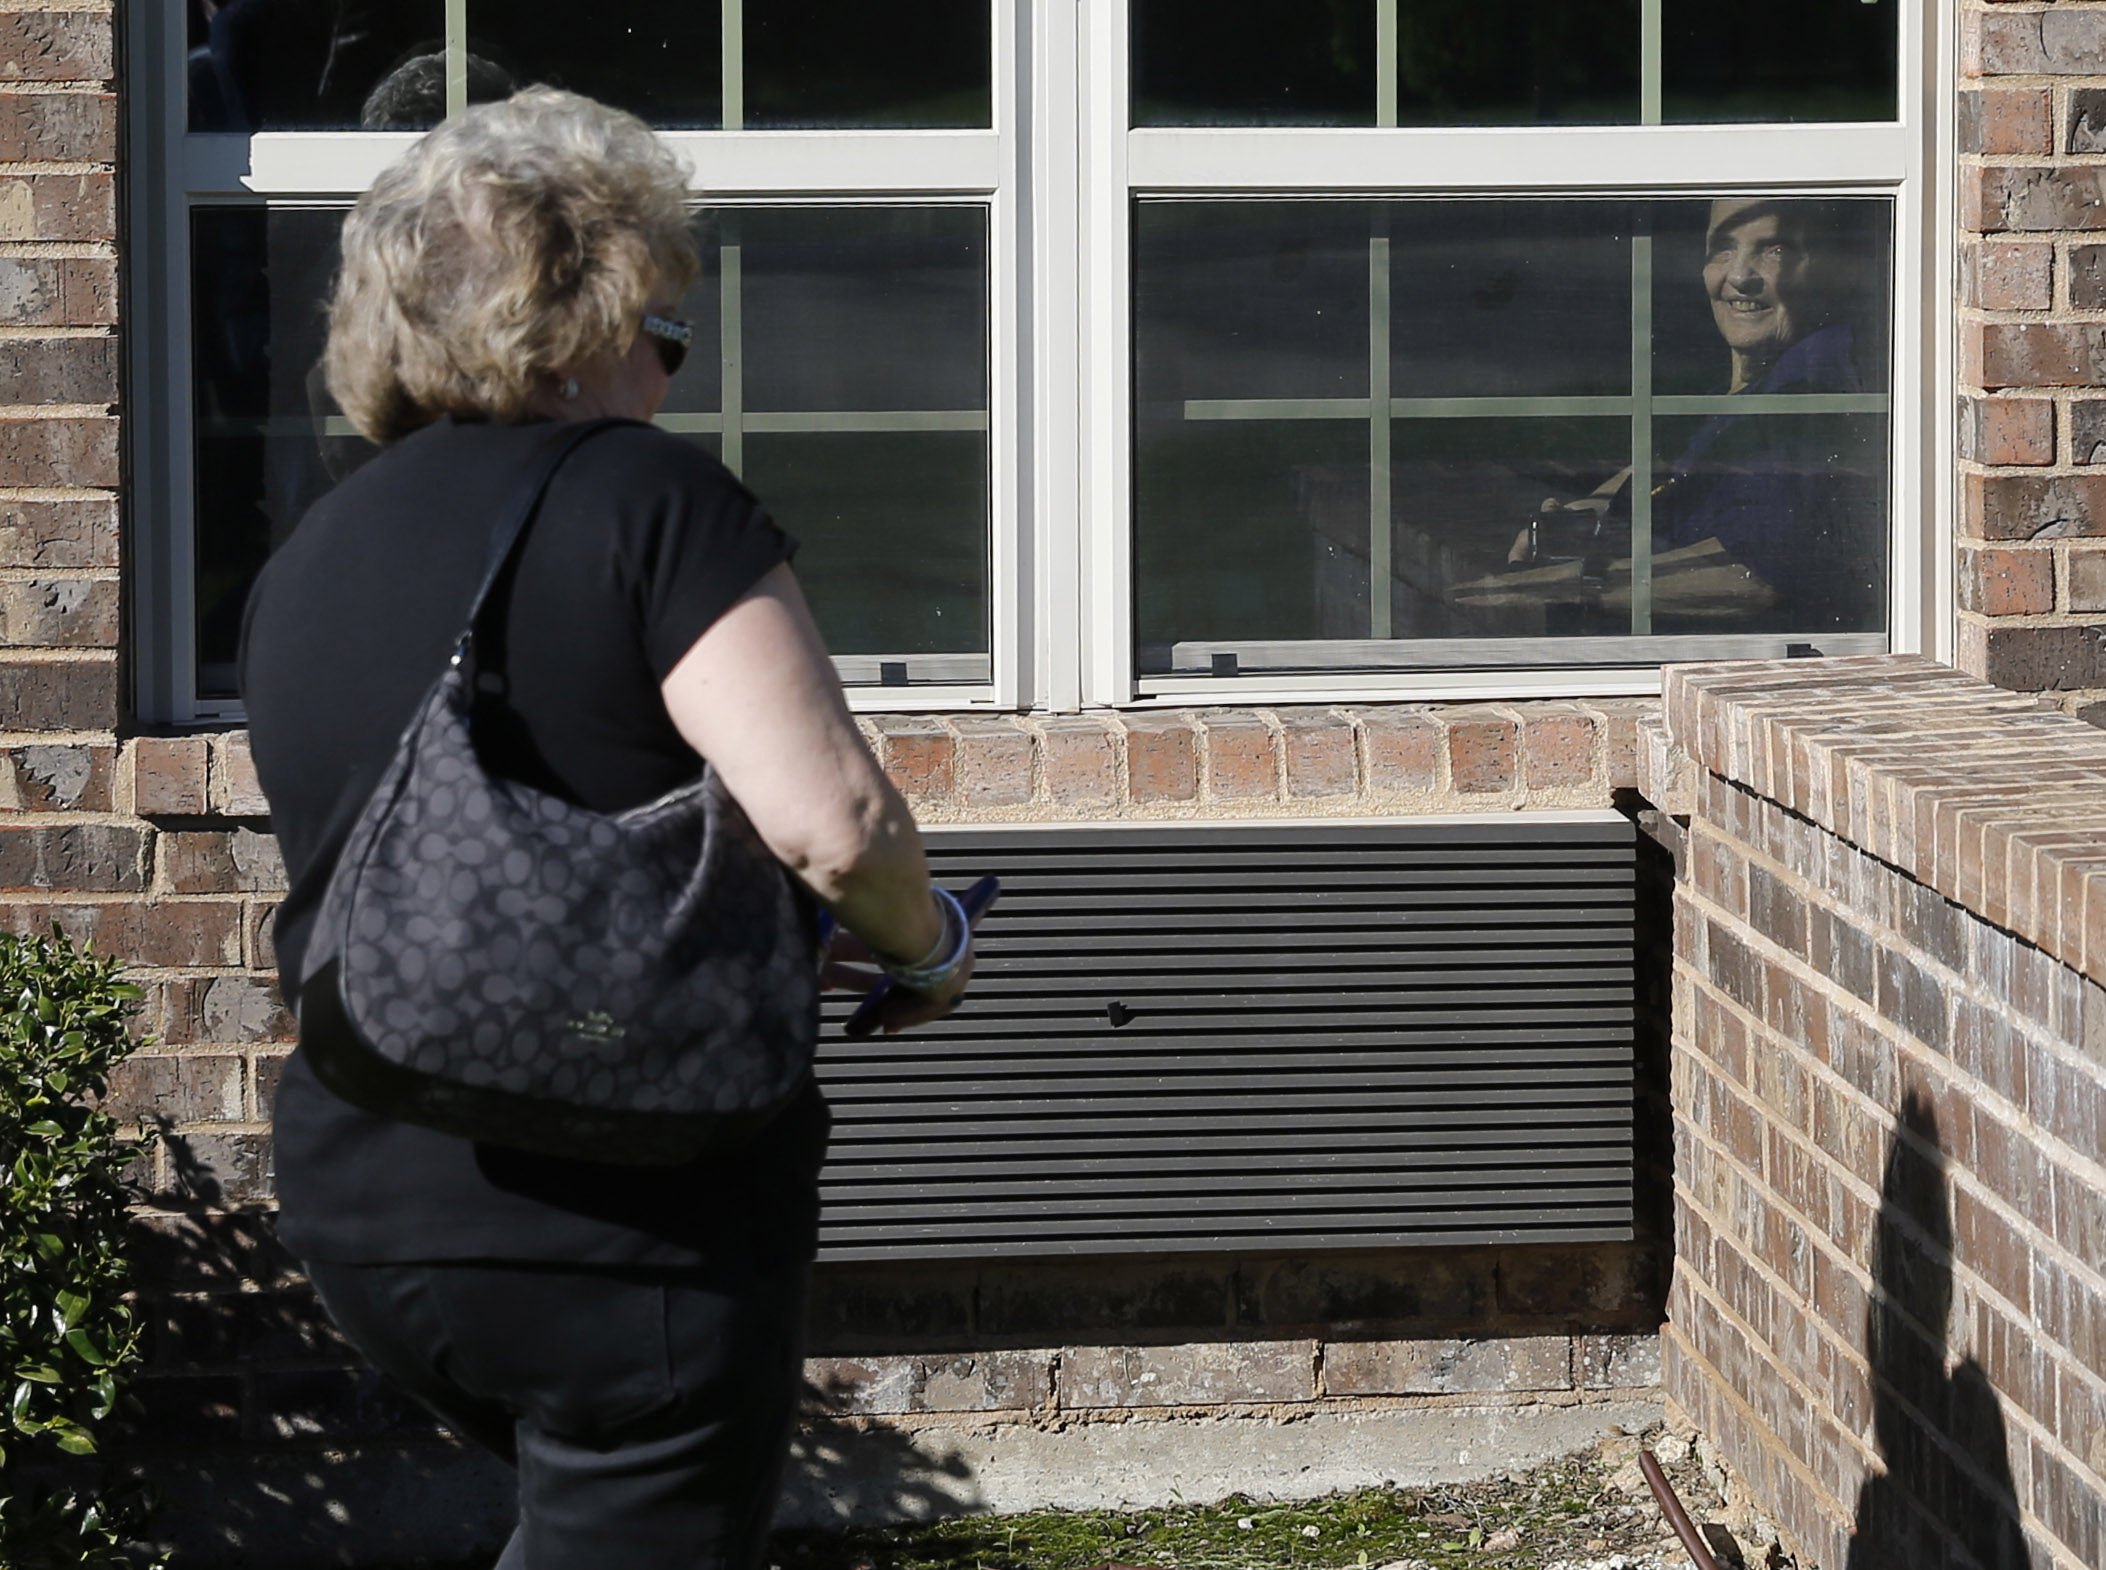 Texas expands nursing home visitation to allow more contact